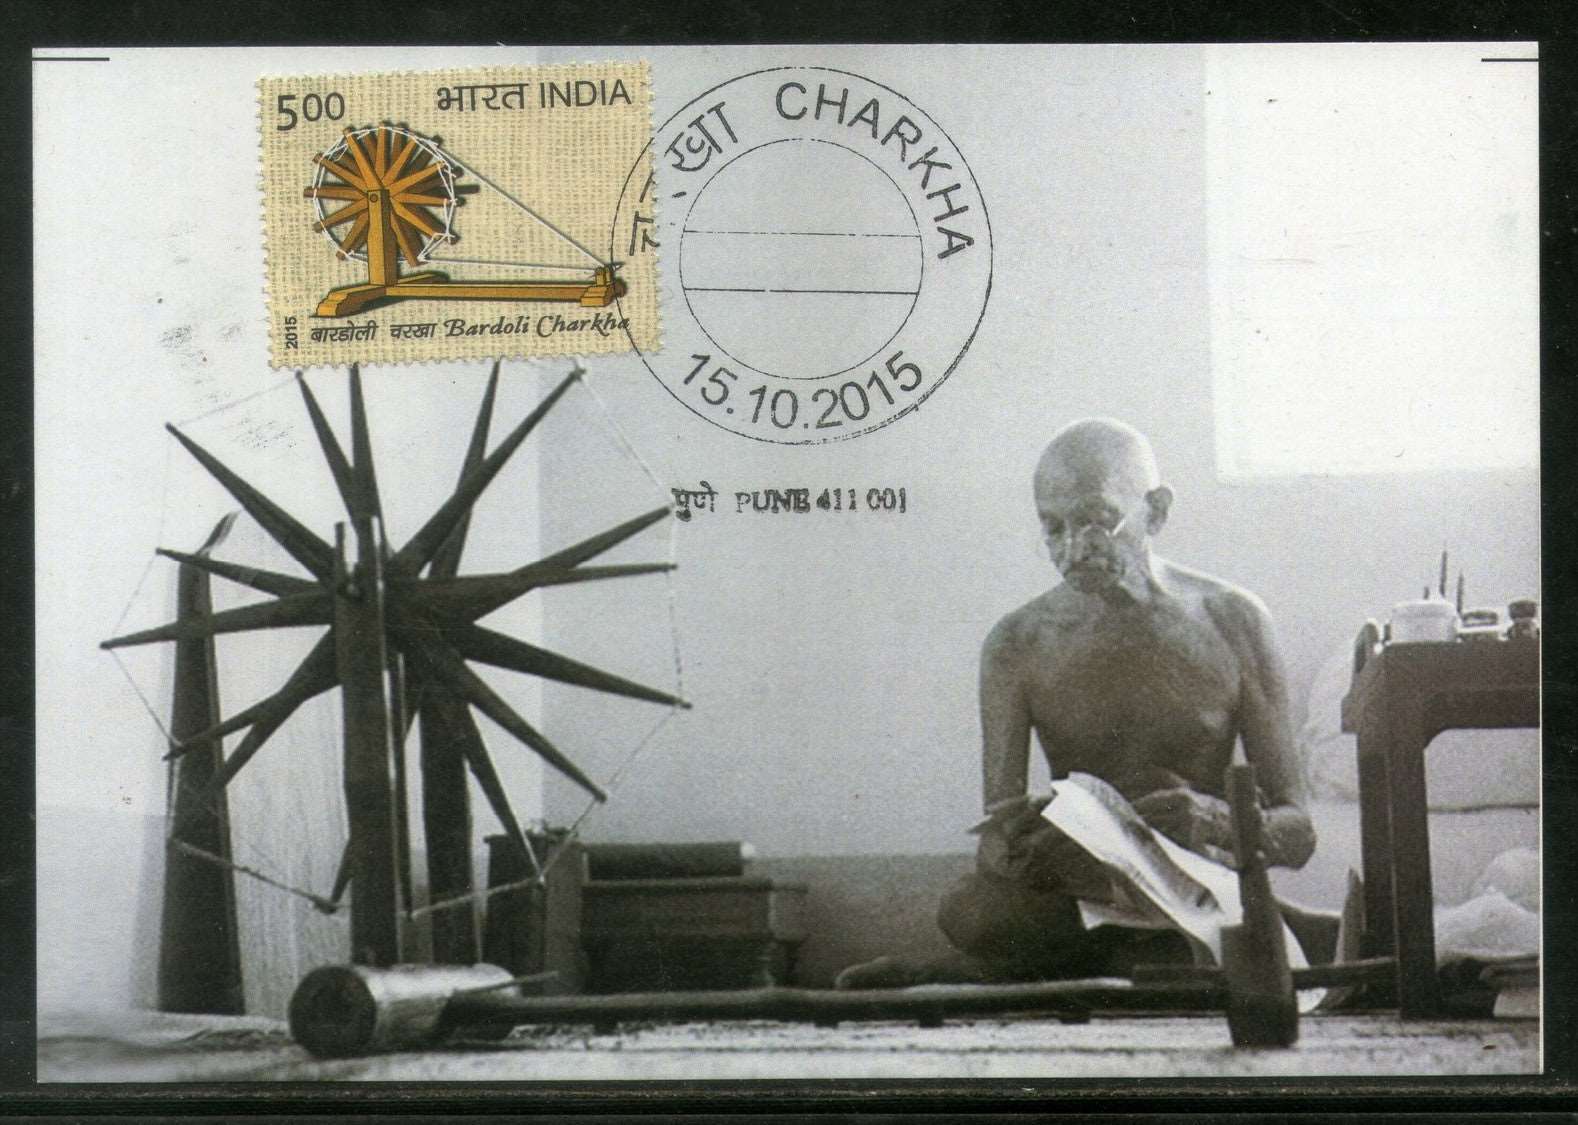 Ghandi on a spinning wheel